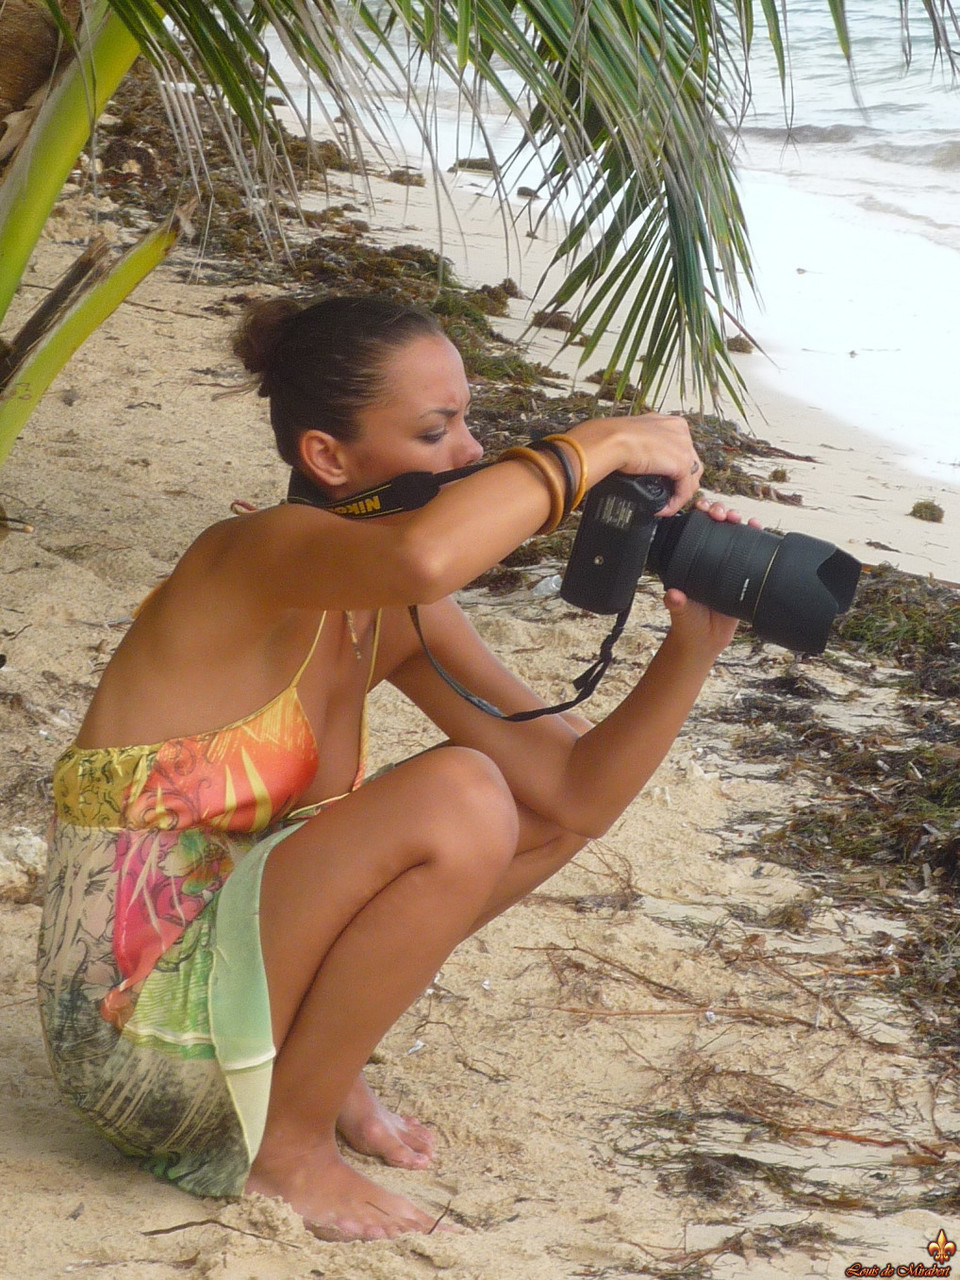 Beautiful girls work free of their swimwear while modeling on a tropical beach 포르노 사진 #424108094